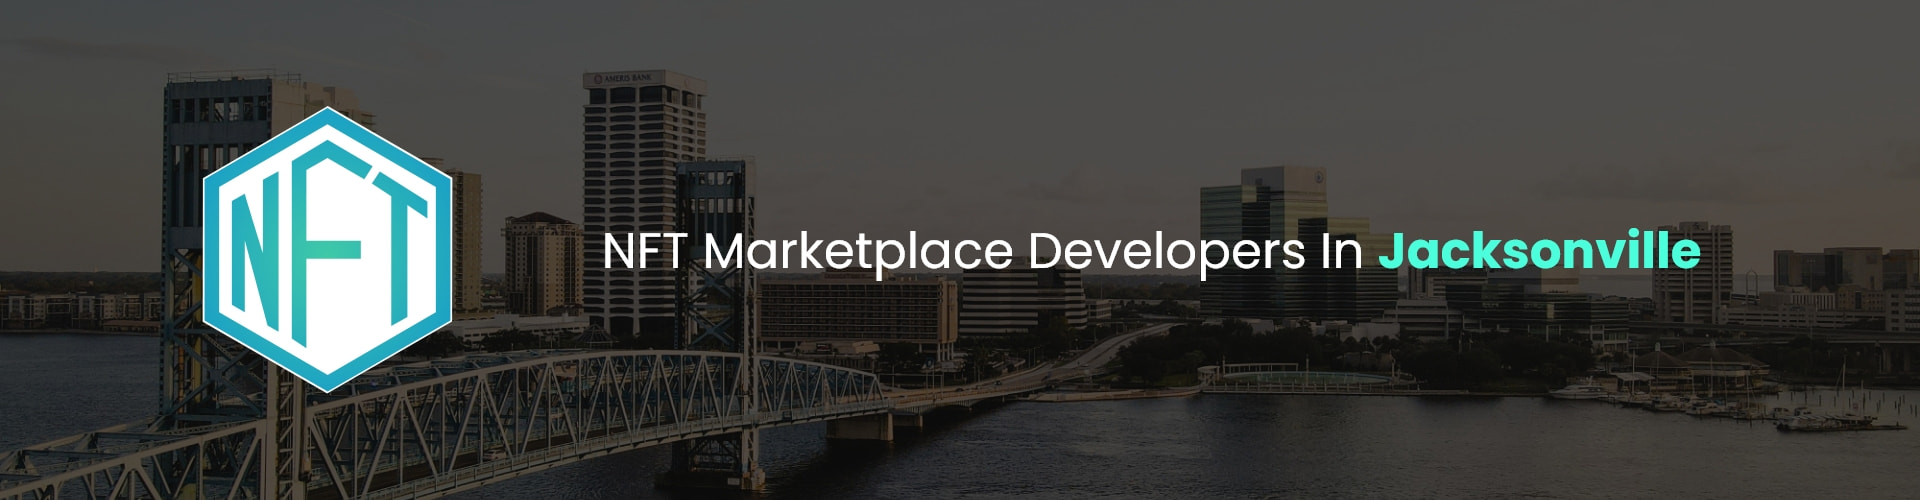 hire nft marketplace developers in jacksonville